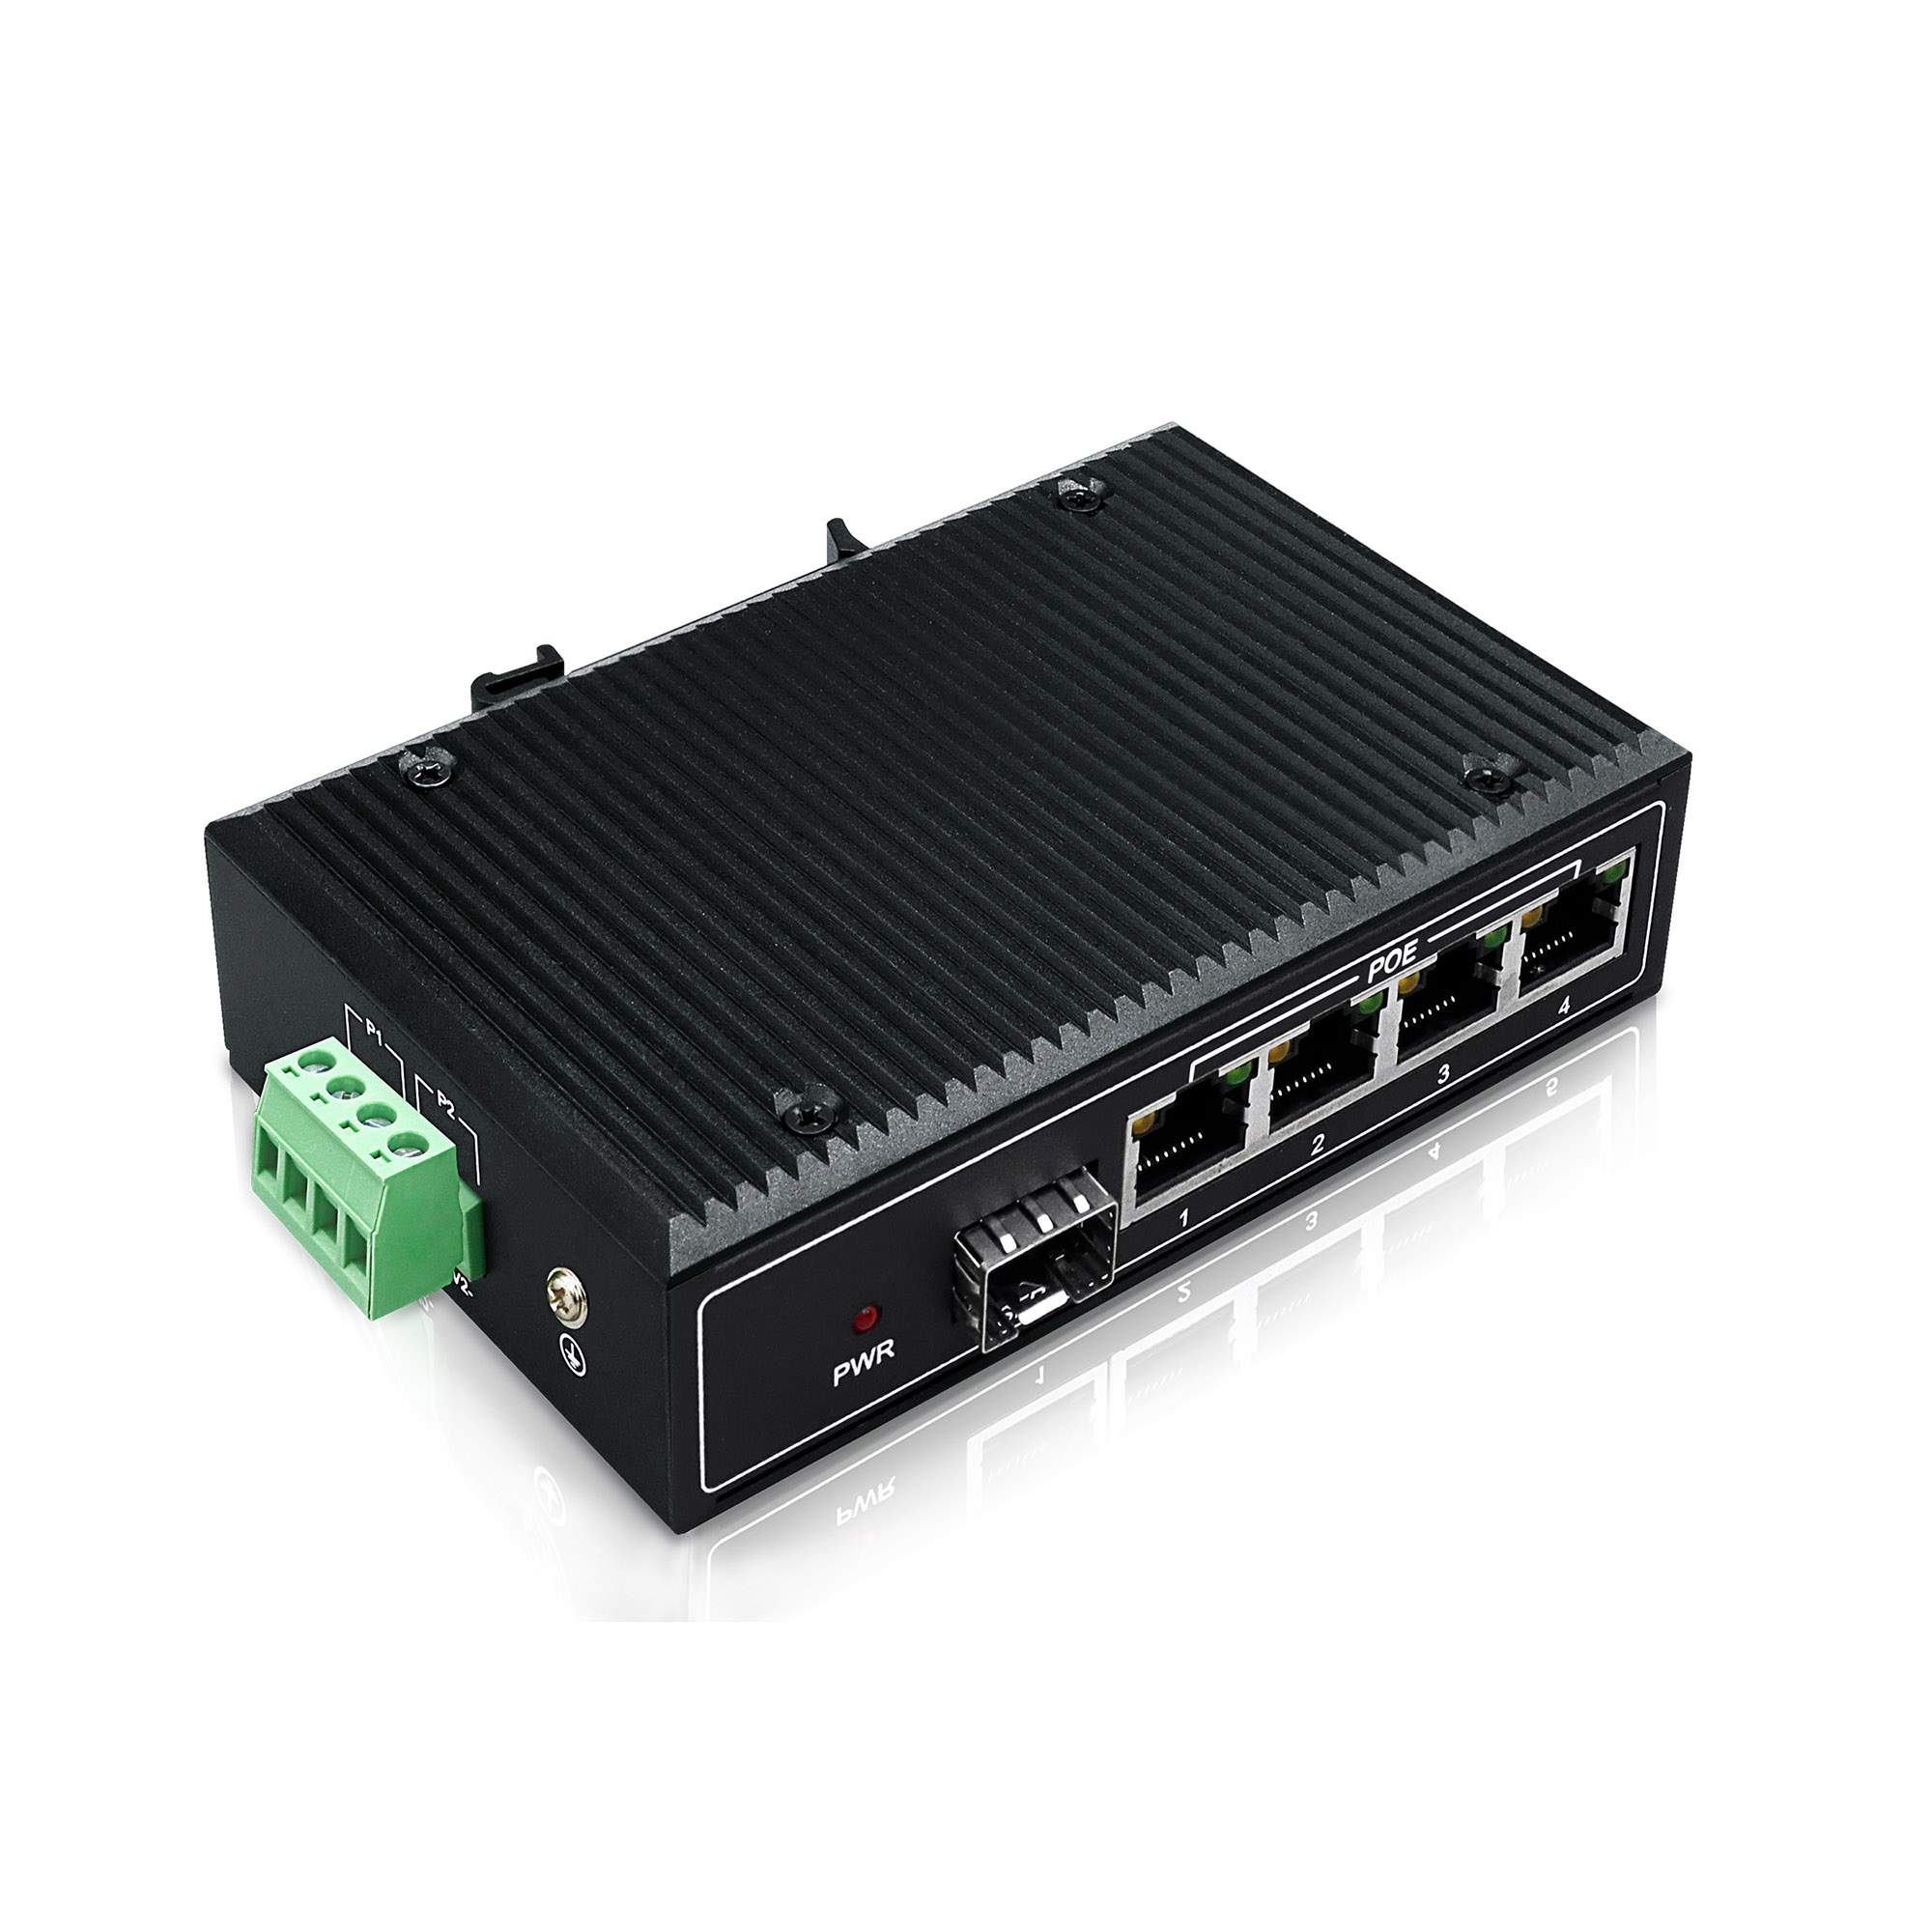 YN-SG105SP1 Industrial Ethernet PoE Switch